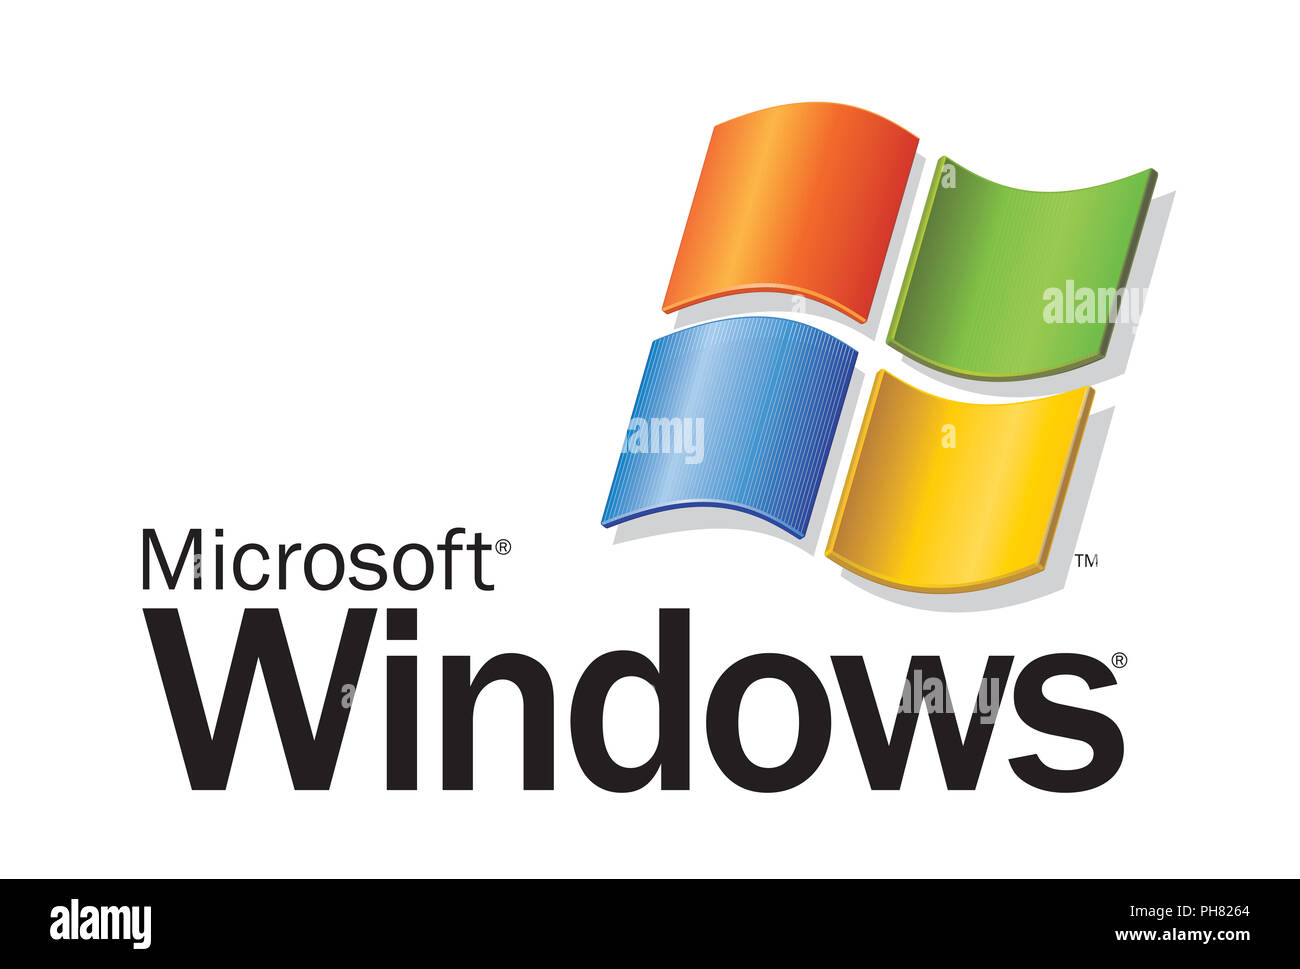 Microsoft Windows logo illustration emblem Stock Photo